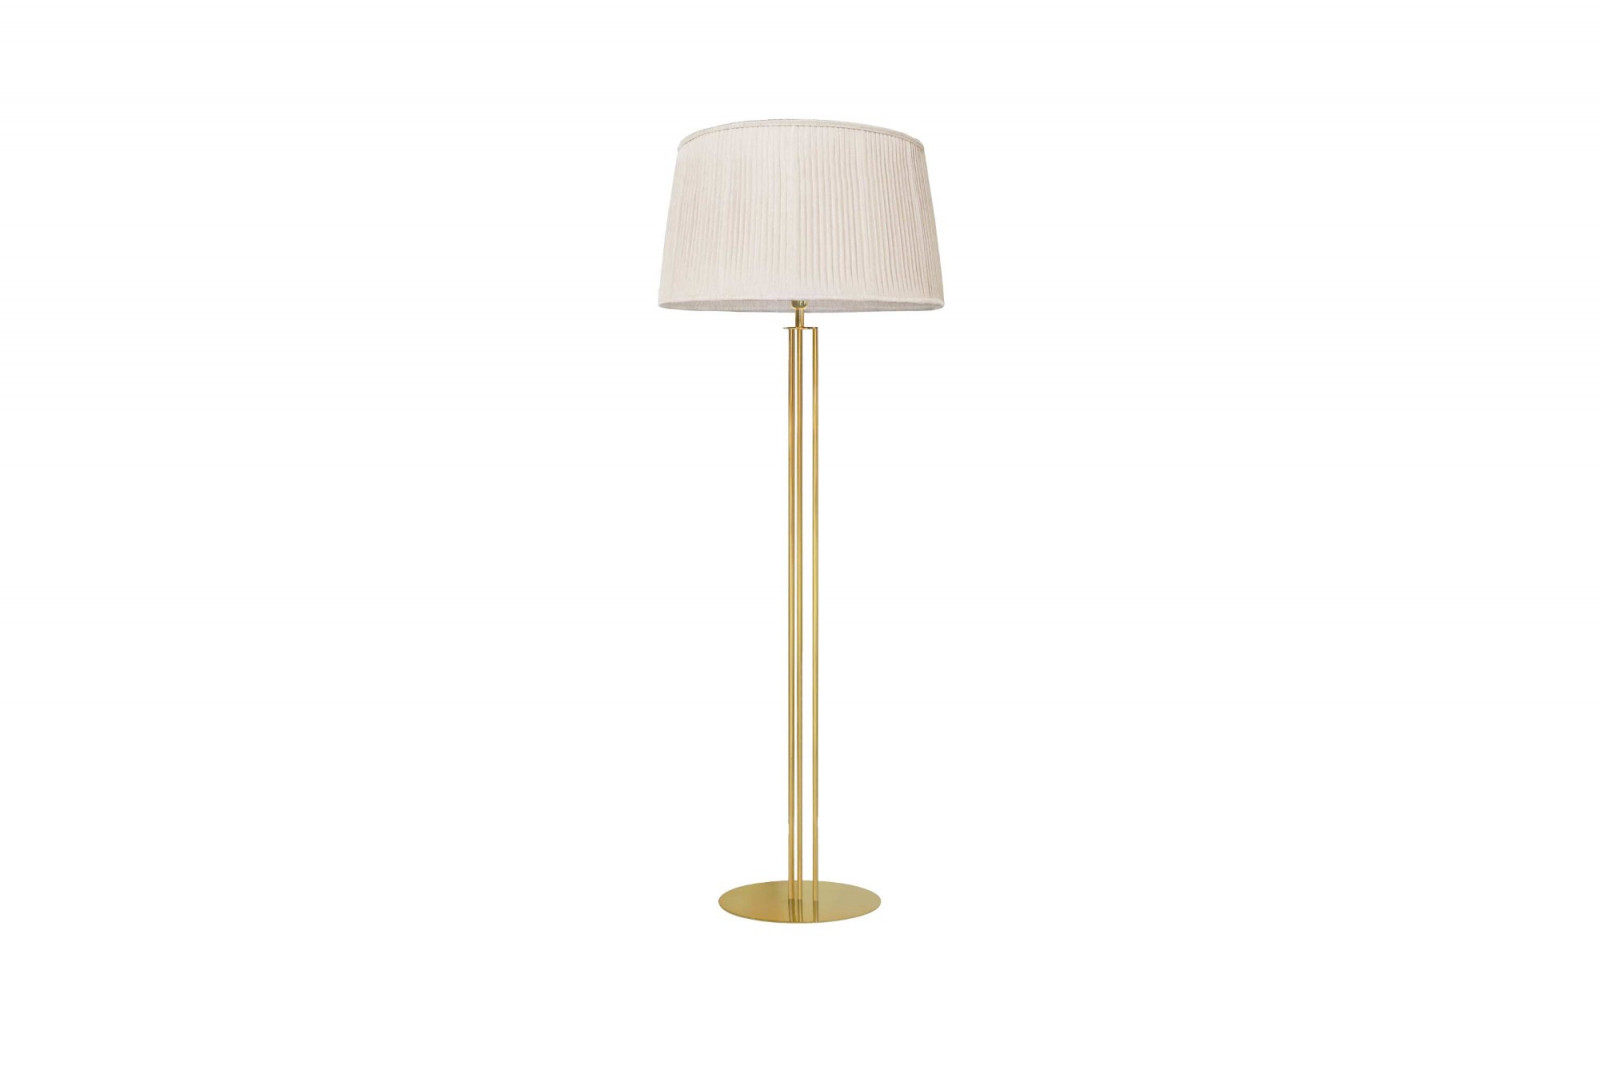 floor-lamp-elegant-modern-luxurious-polished-brass-pandora-gansk-2-1657-1600-1400-100